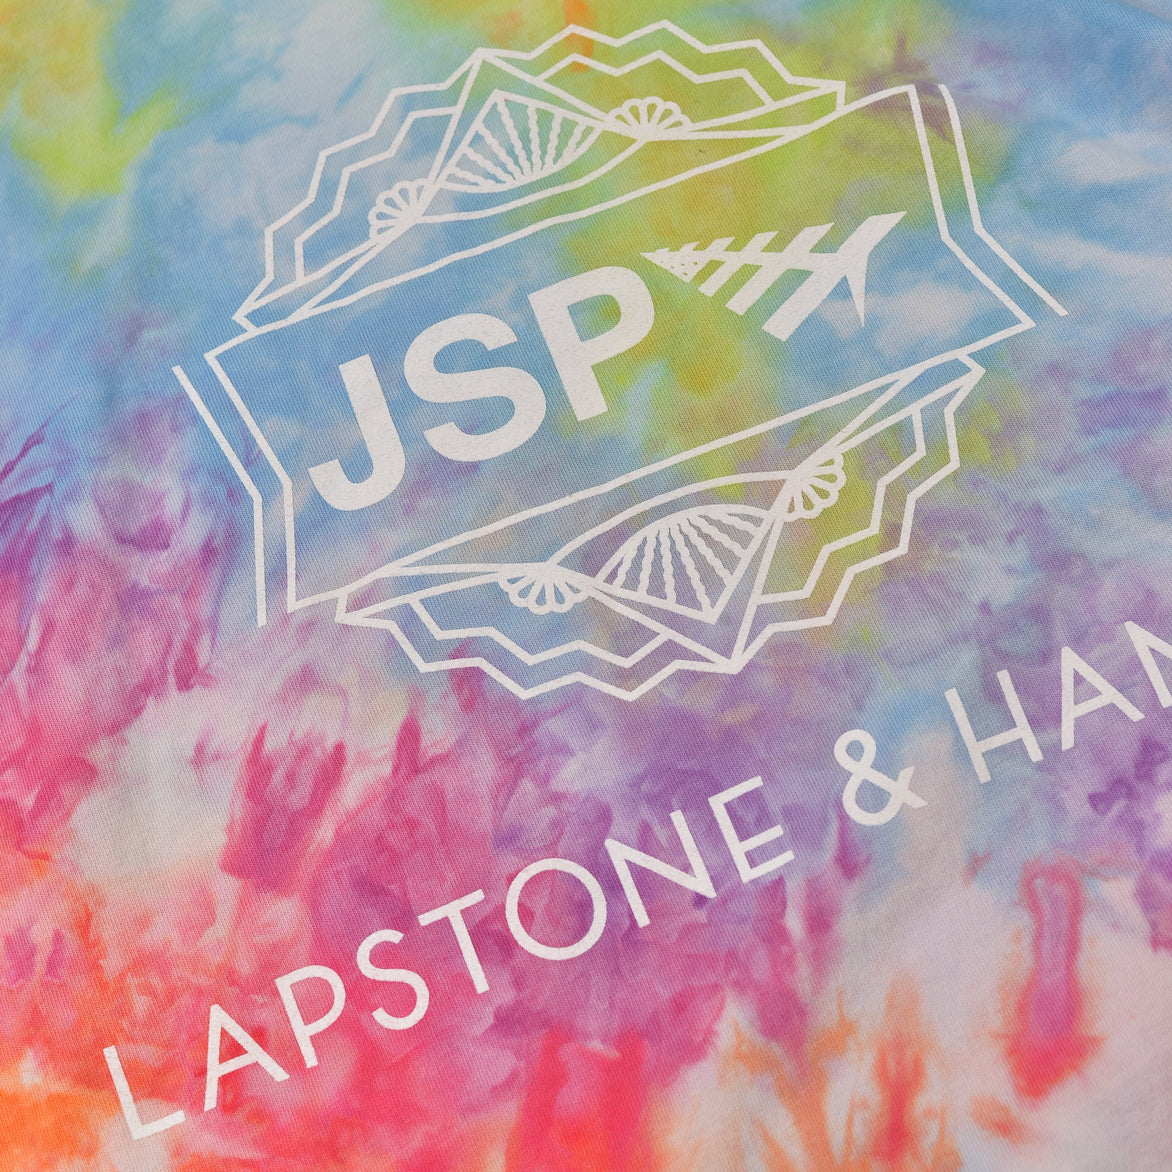 JSP X LAPSTONE X PAPER PLANES "BEAUCOUP" TEE